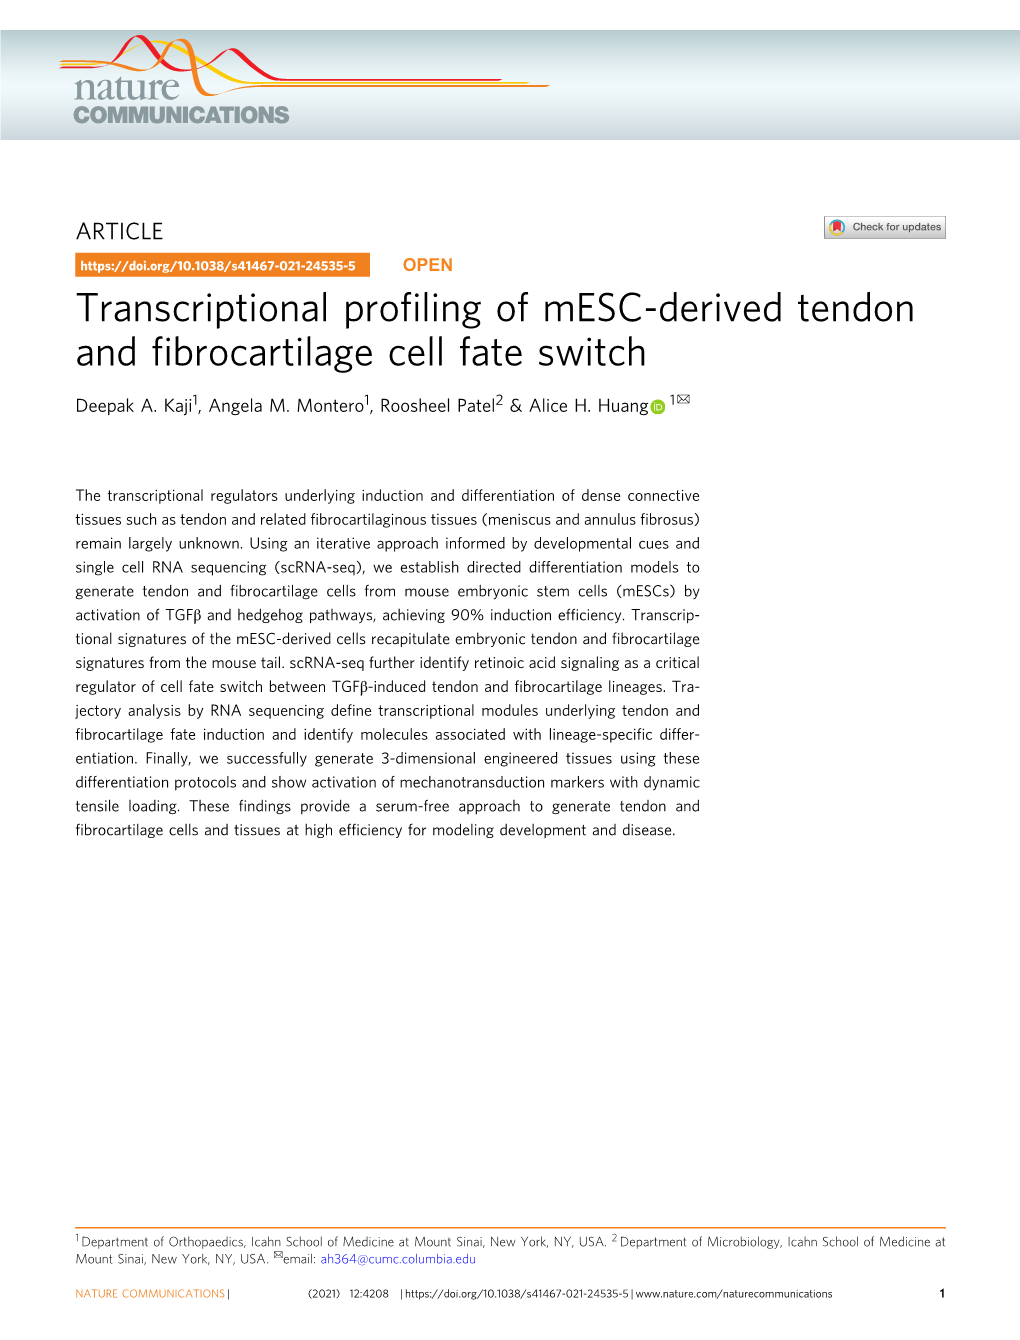 Transcriptional Profiling of Mesc-Derived Tendon And